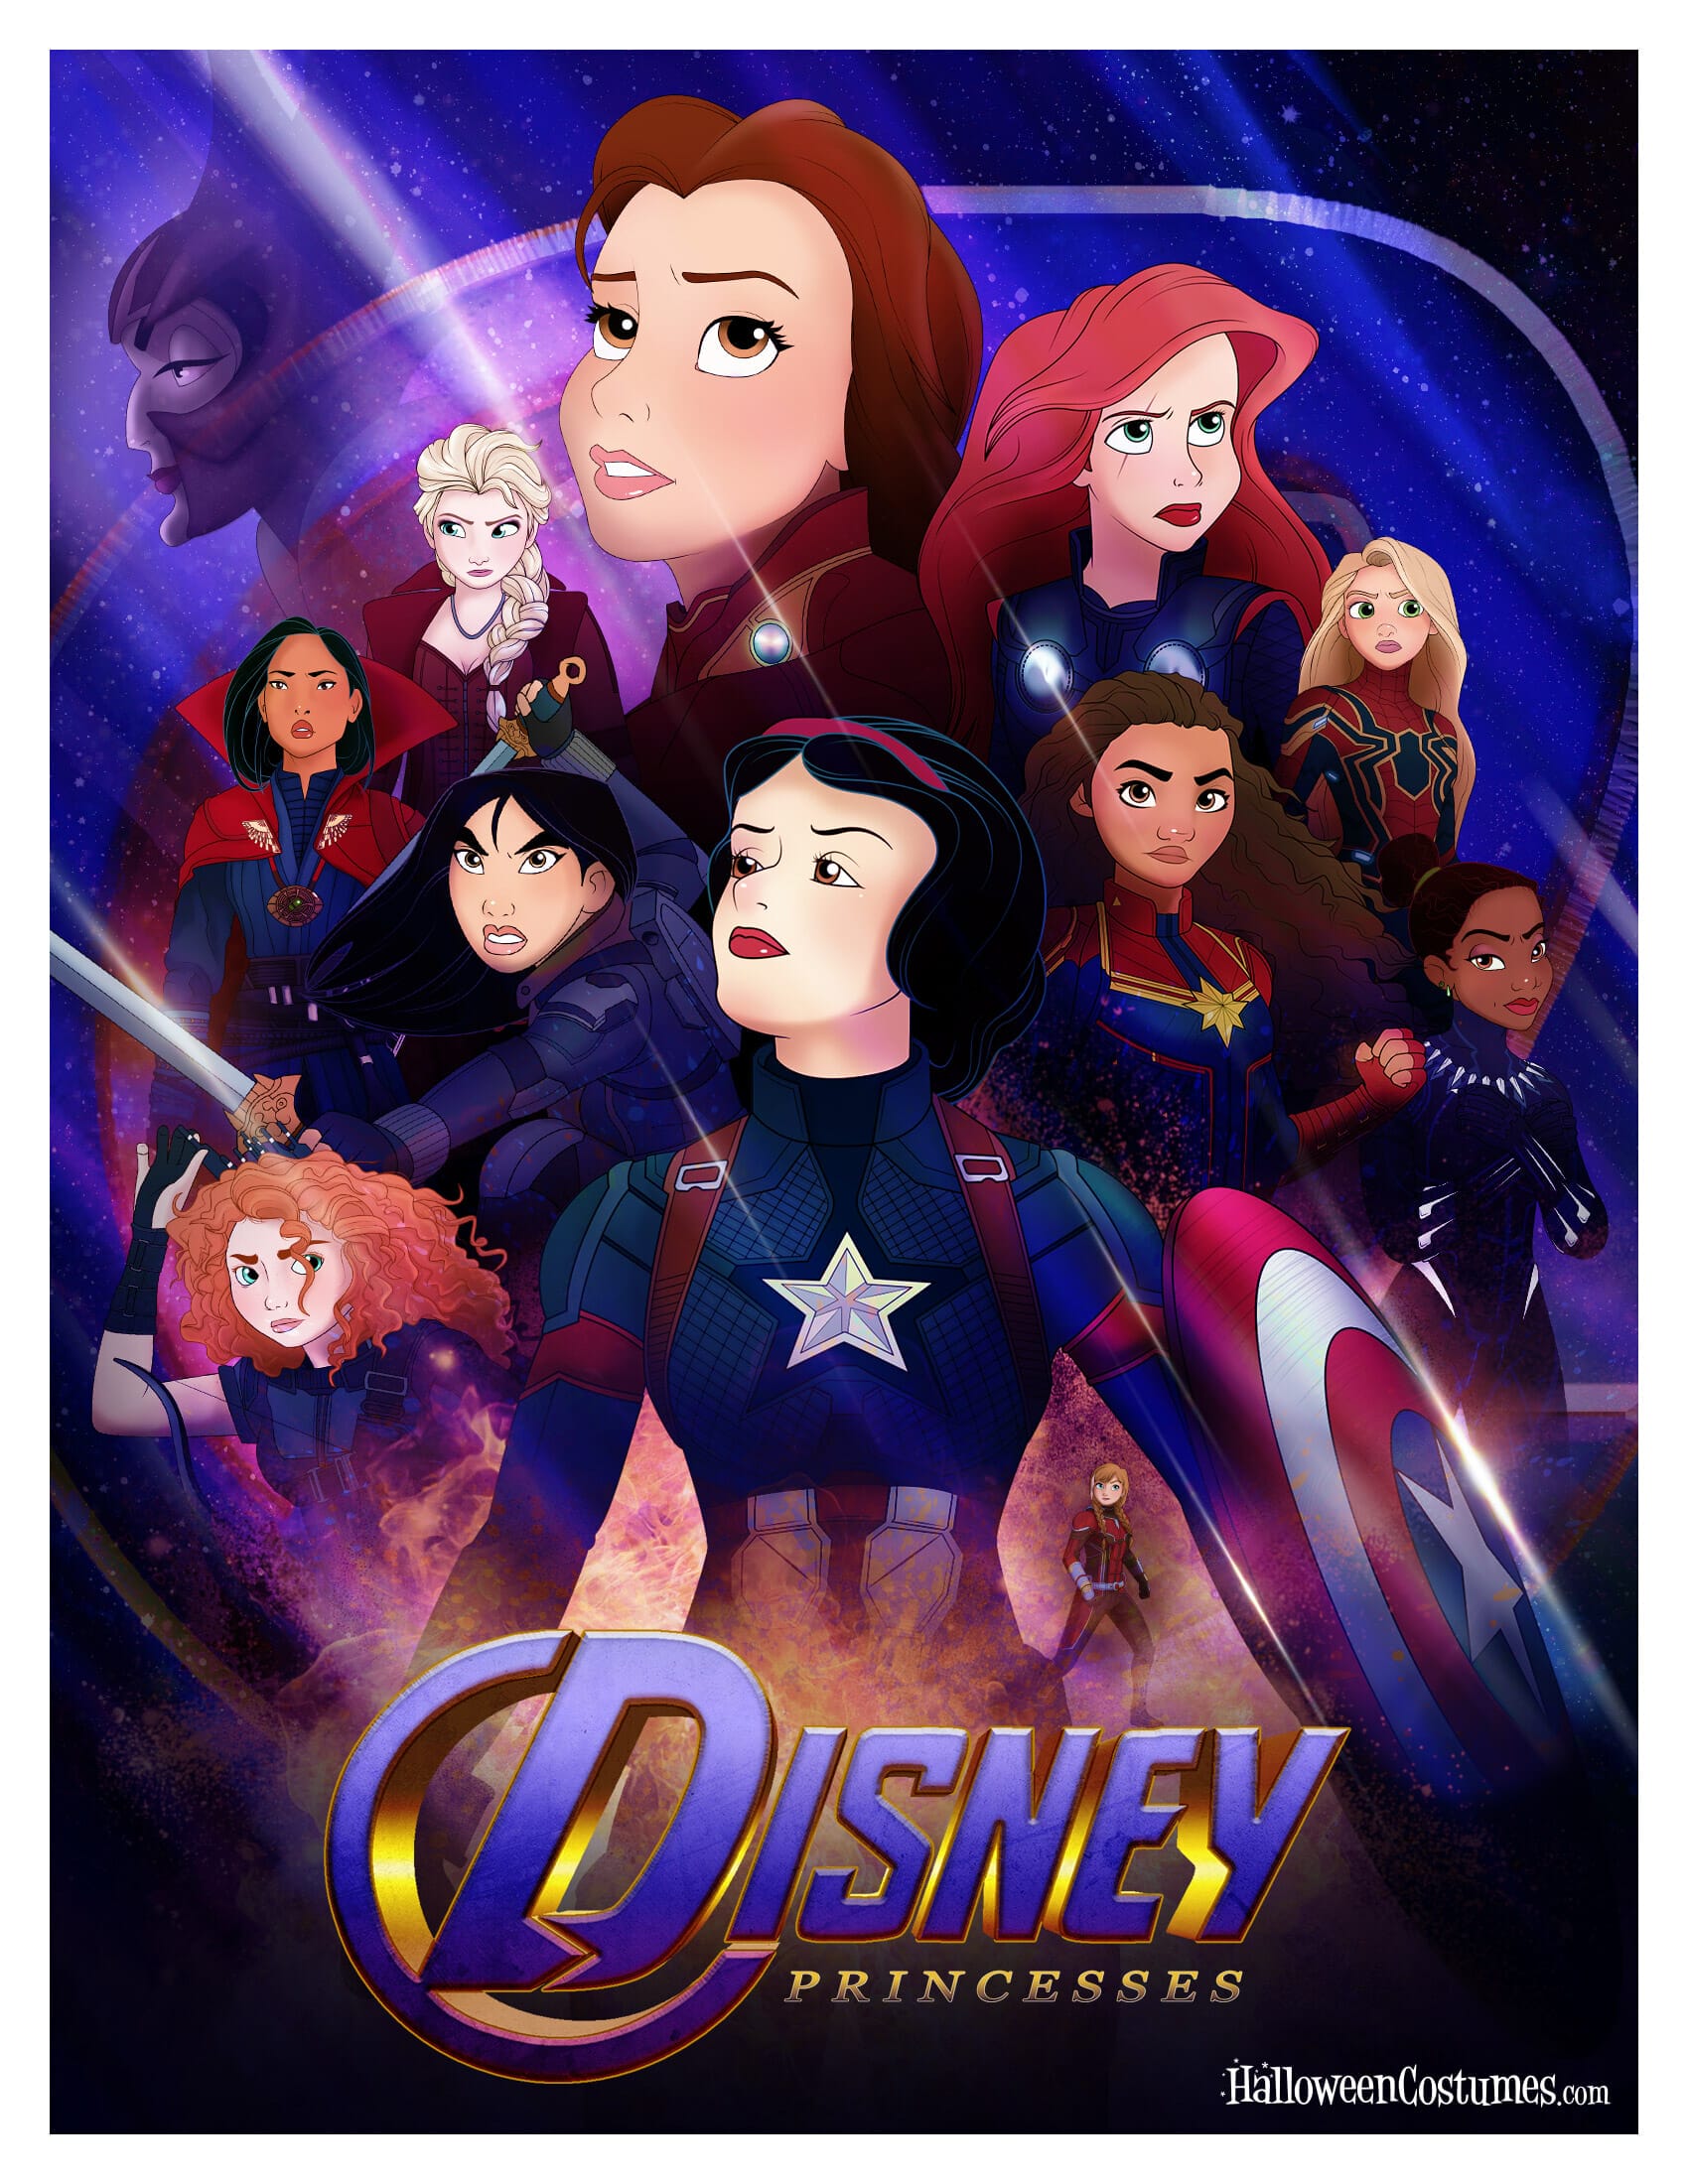 Disney Princess Avengers mashup